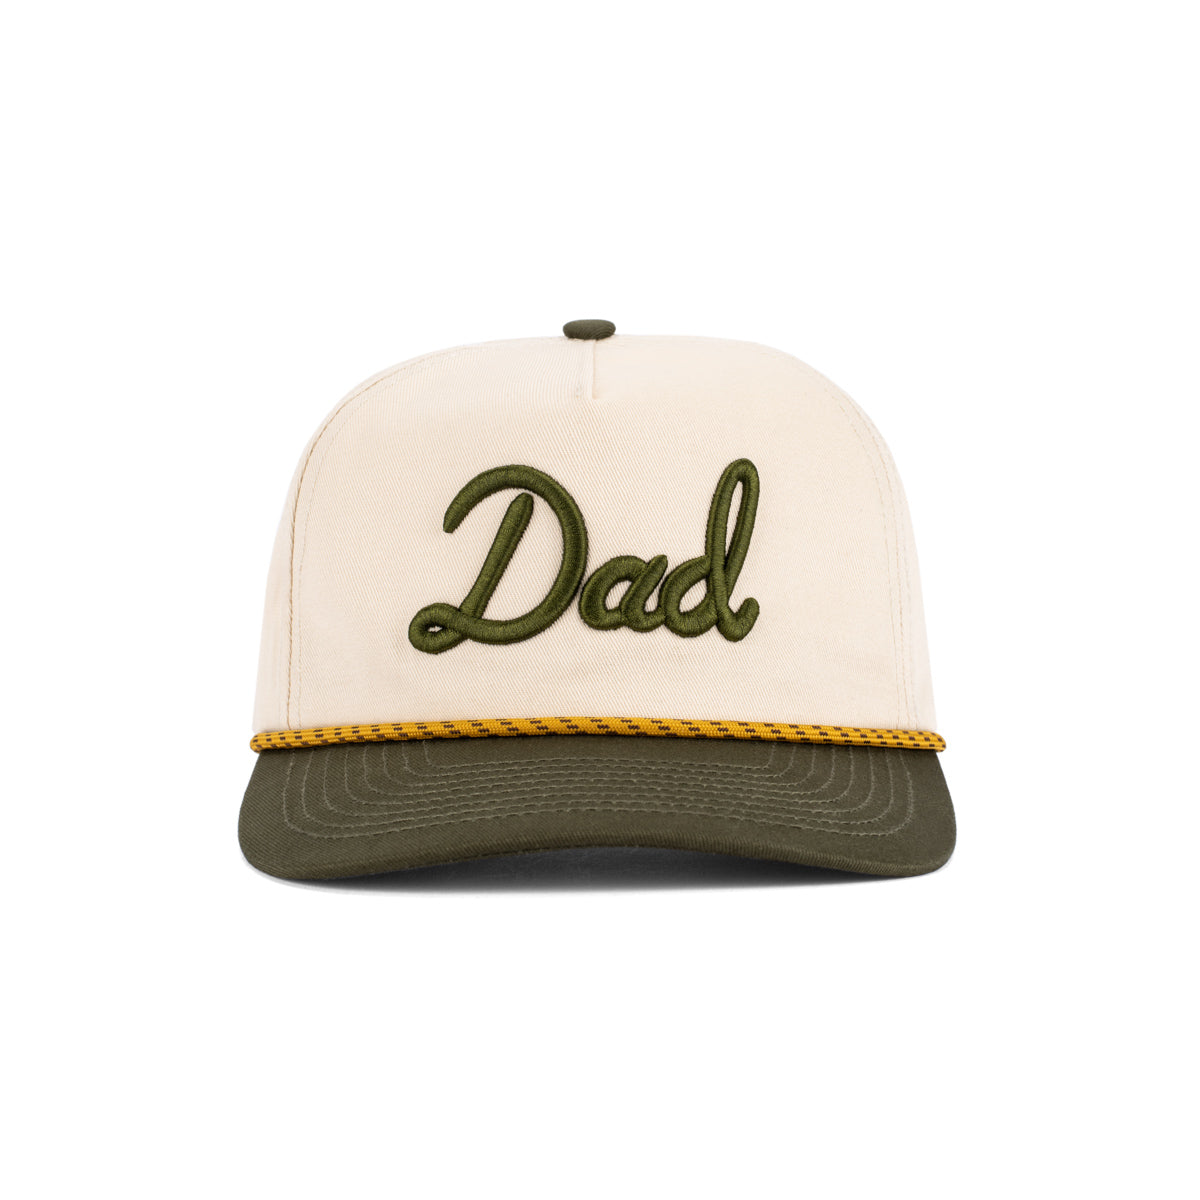 Number One 1 Dad Dad Hat Snapback Hat Cap